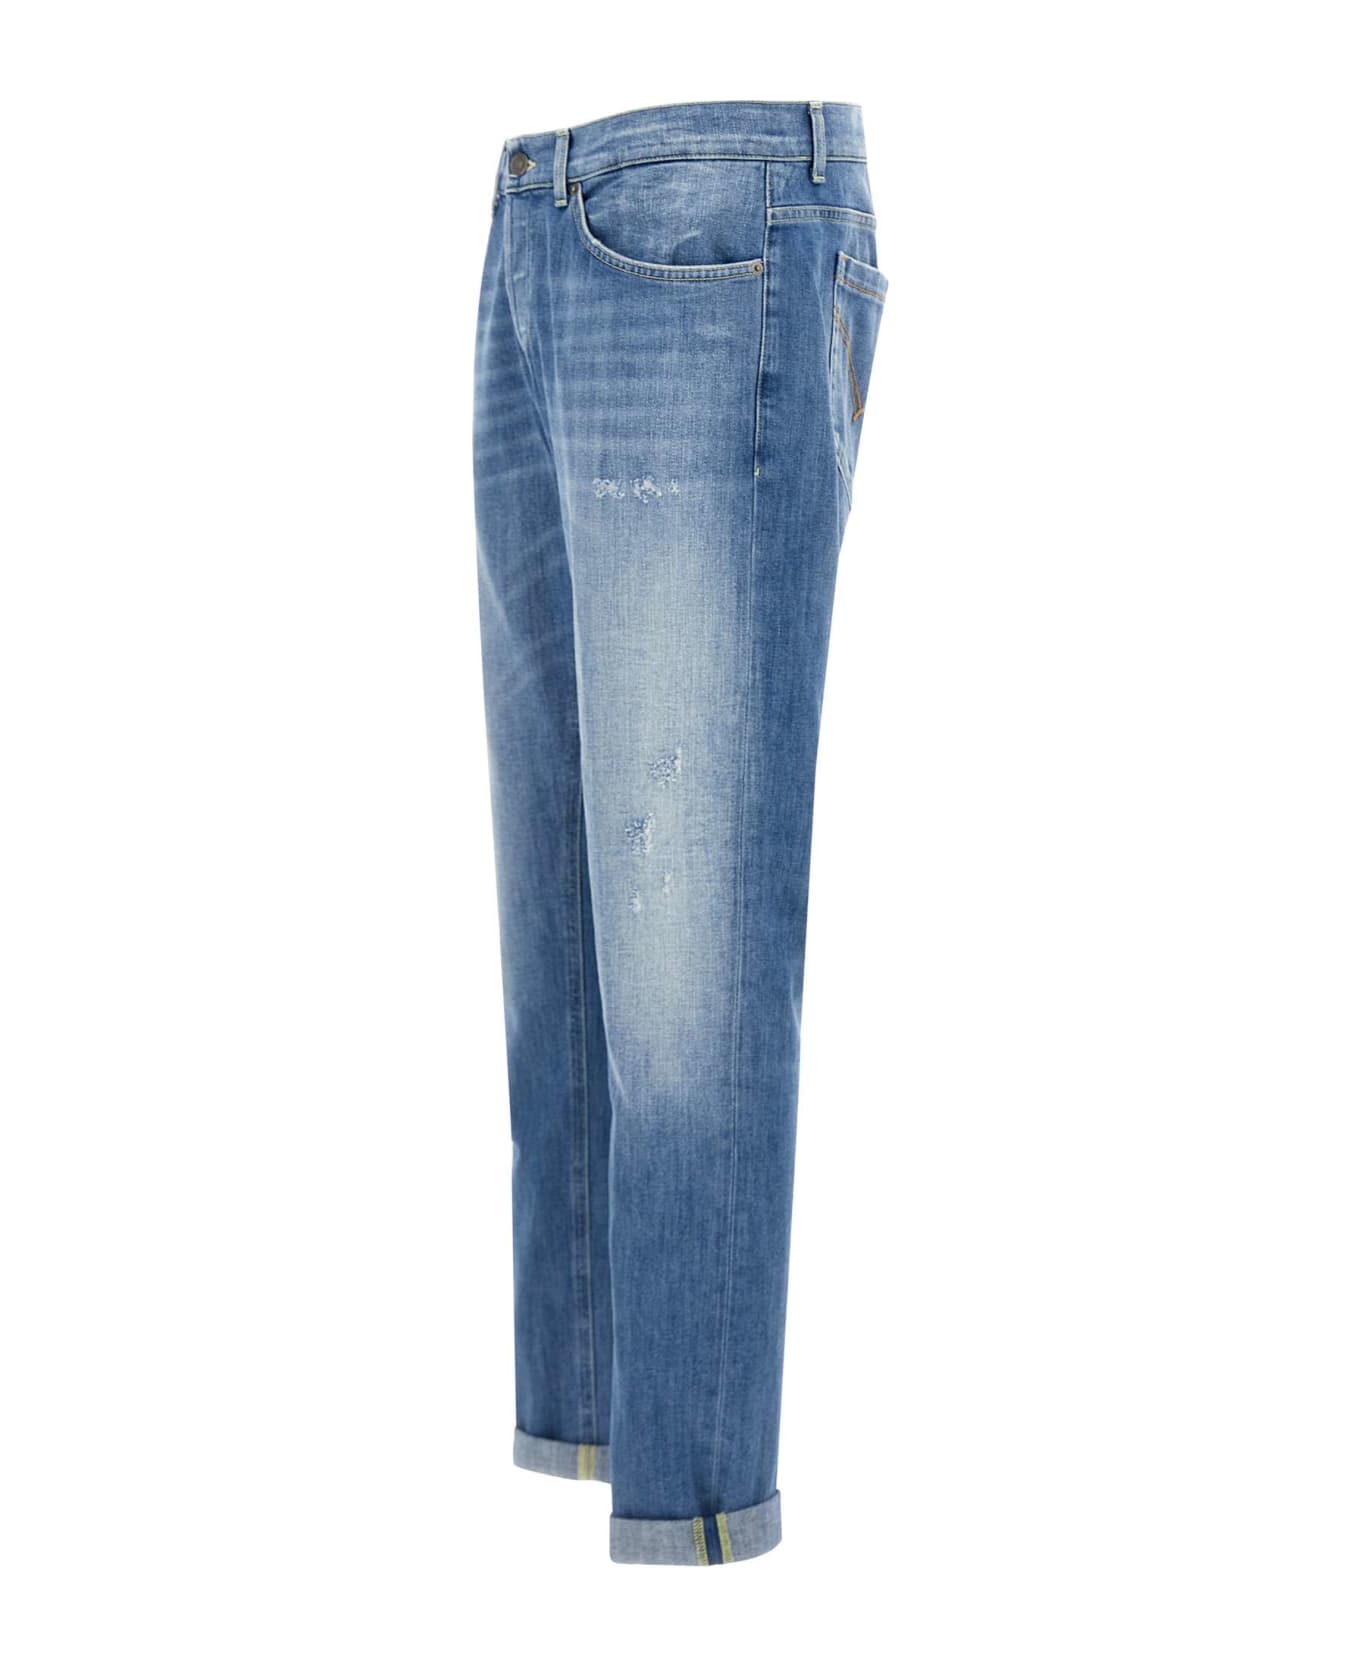 Dondup "george" Cotton Denim Jeans - BLUE